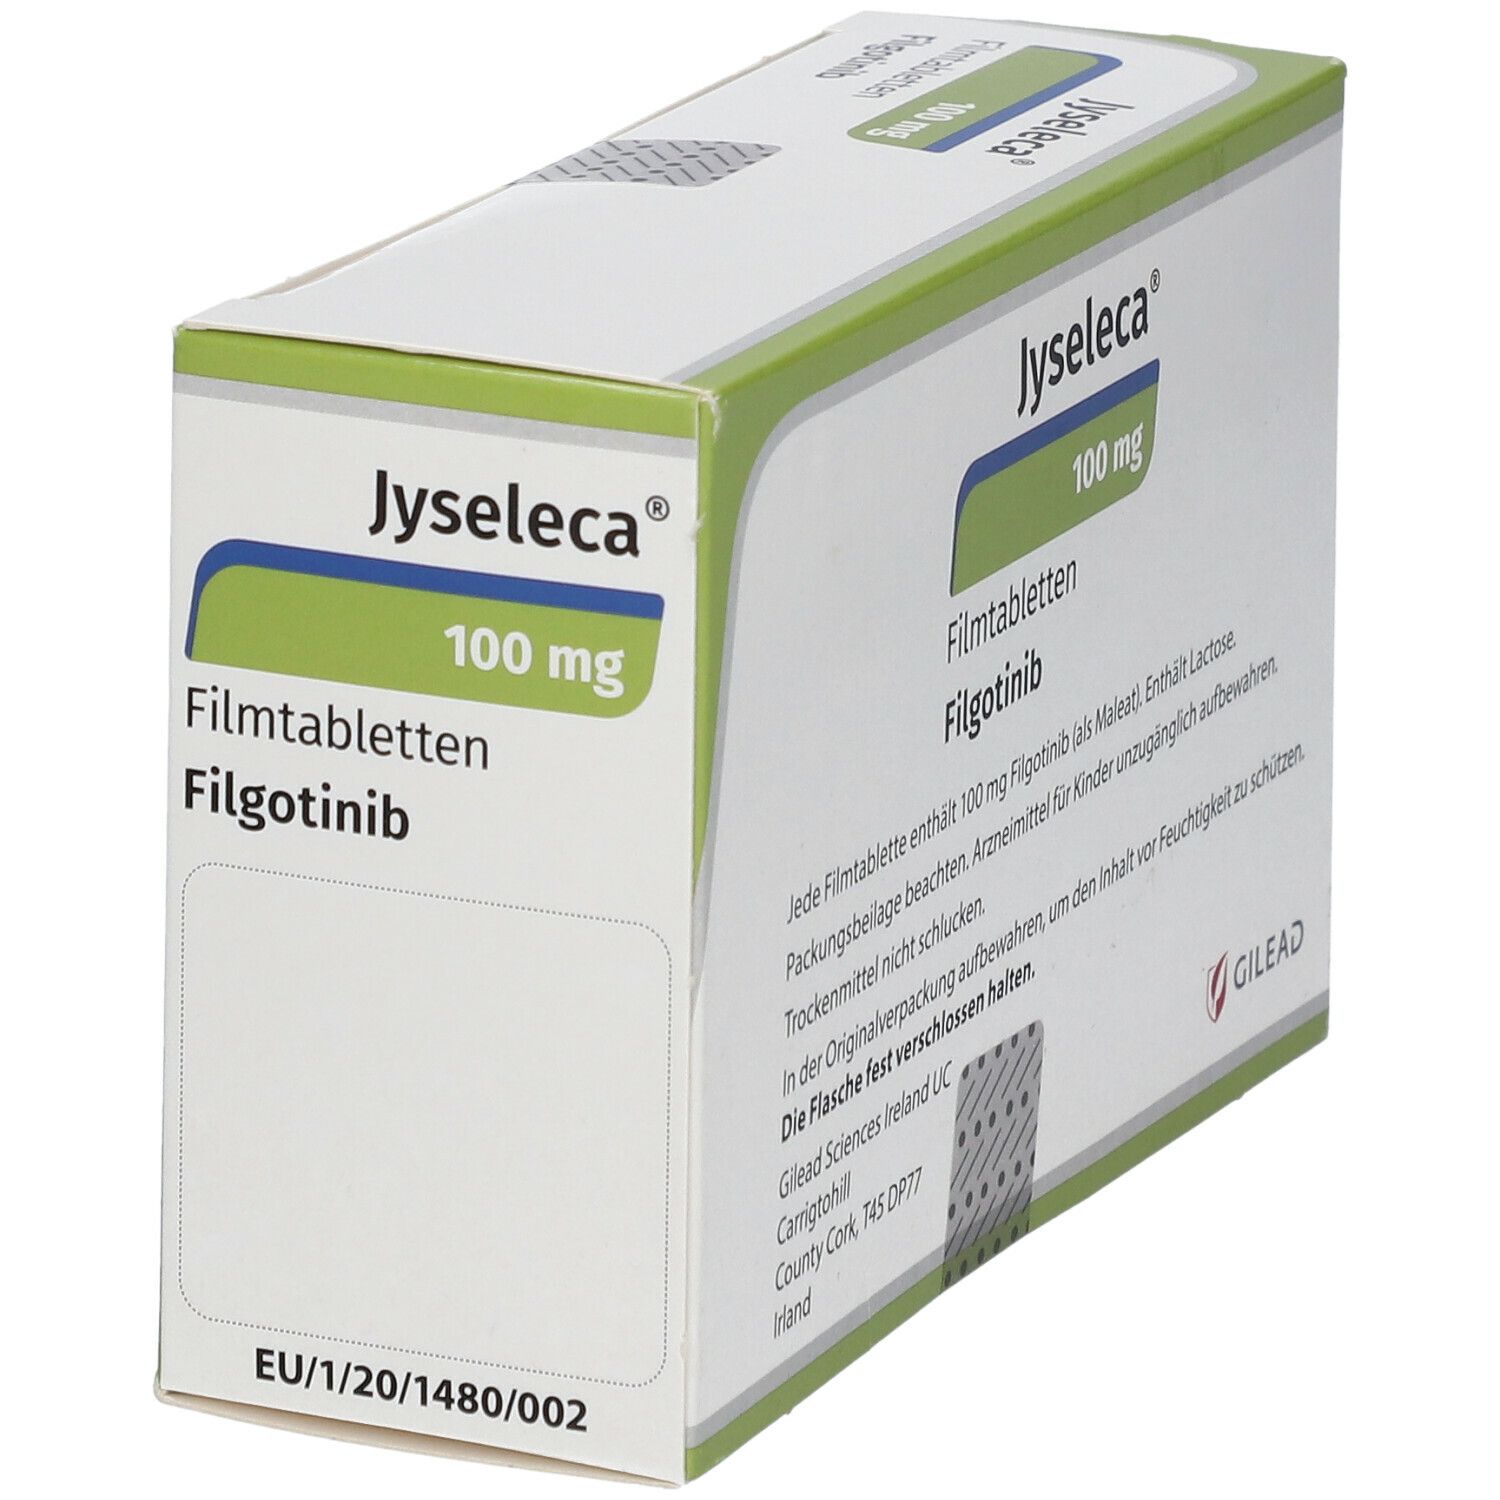 Jyseleca® 100 mg